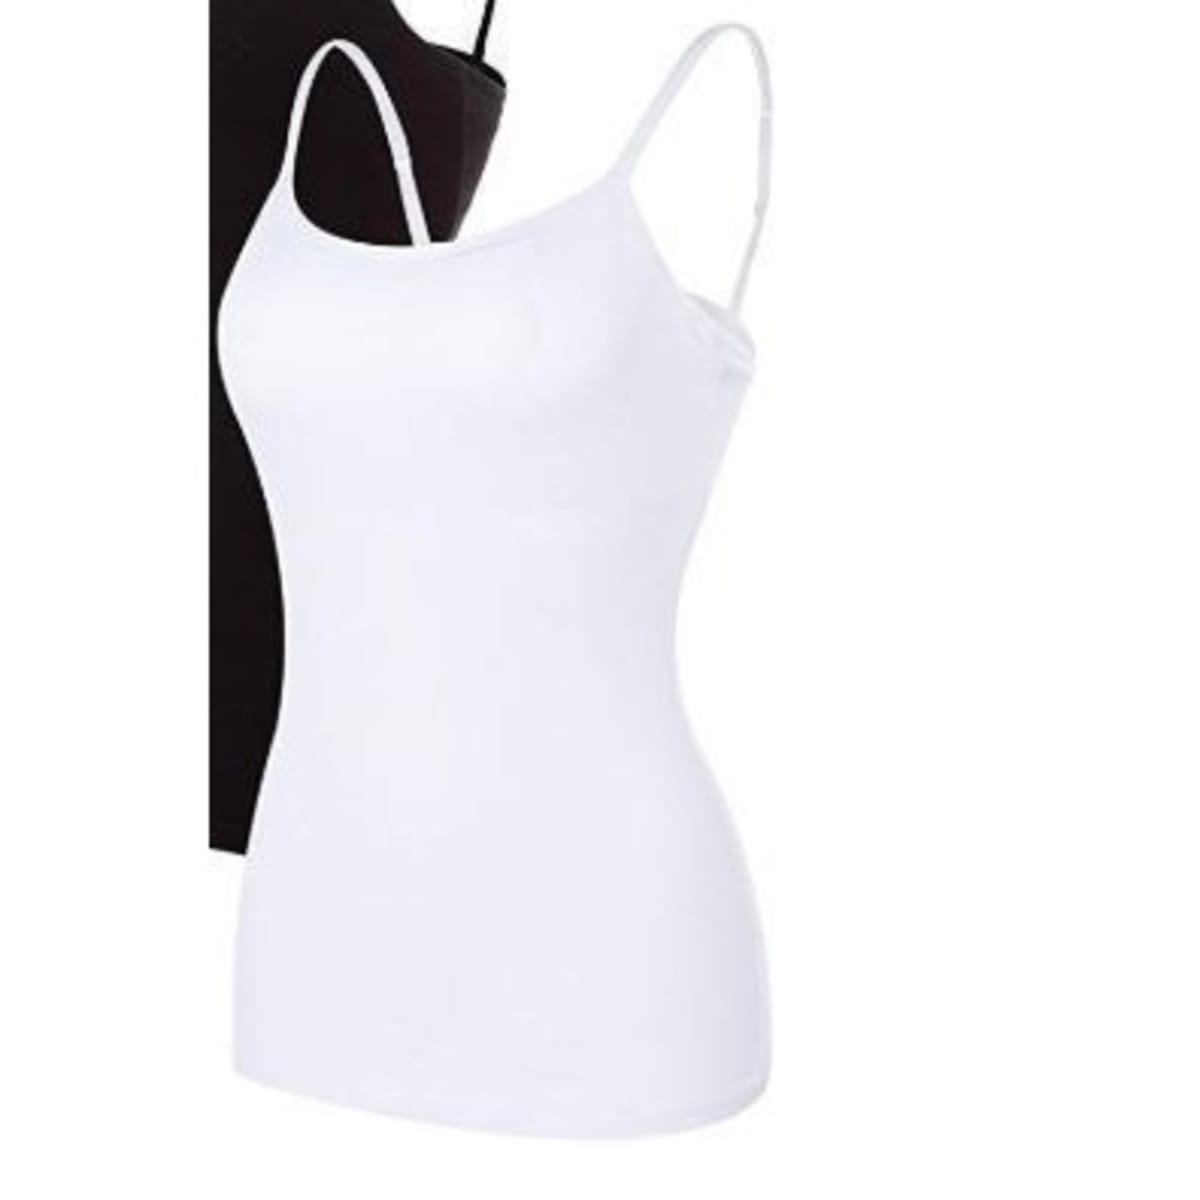 Ladies Cotton Strap Camisole- Black & White